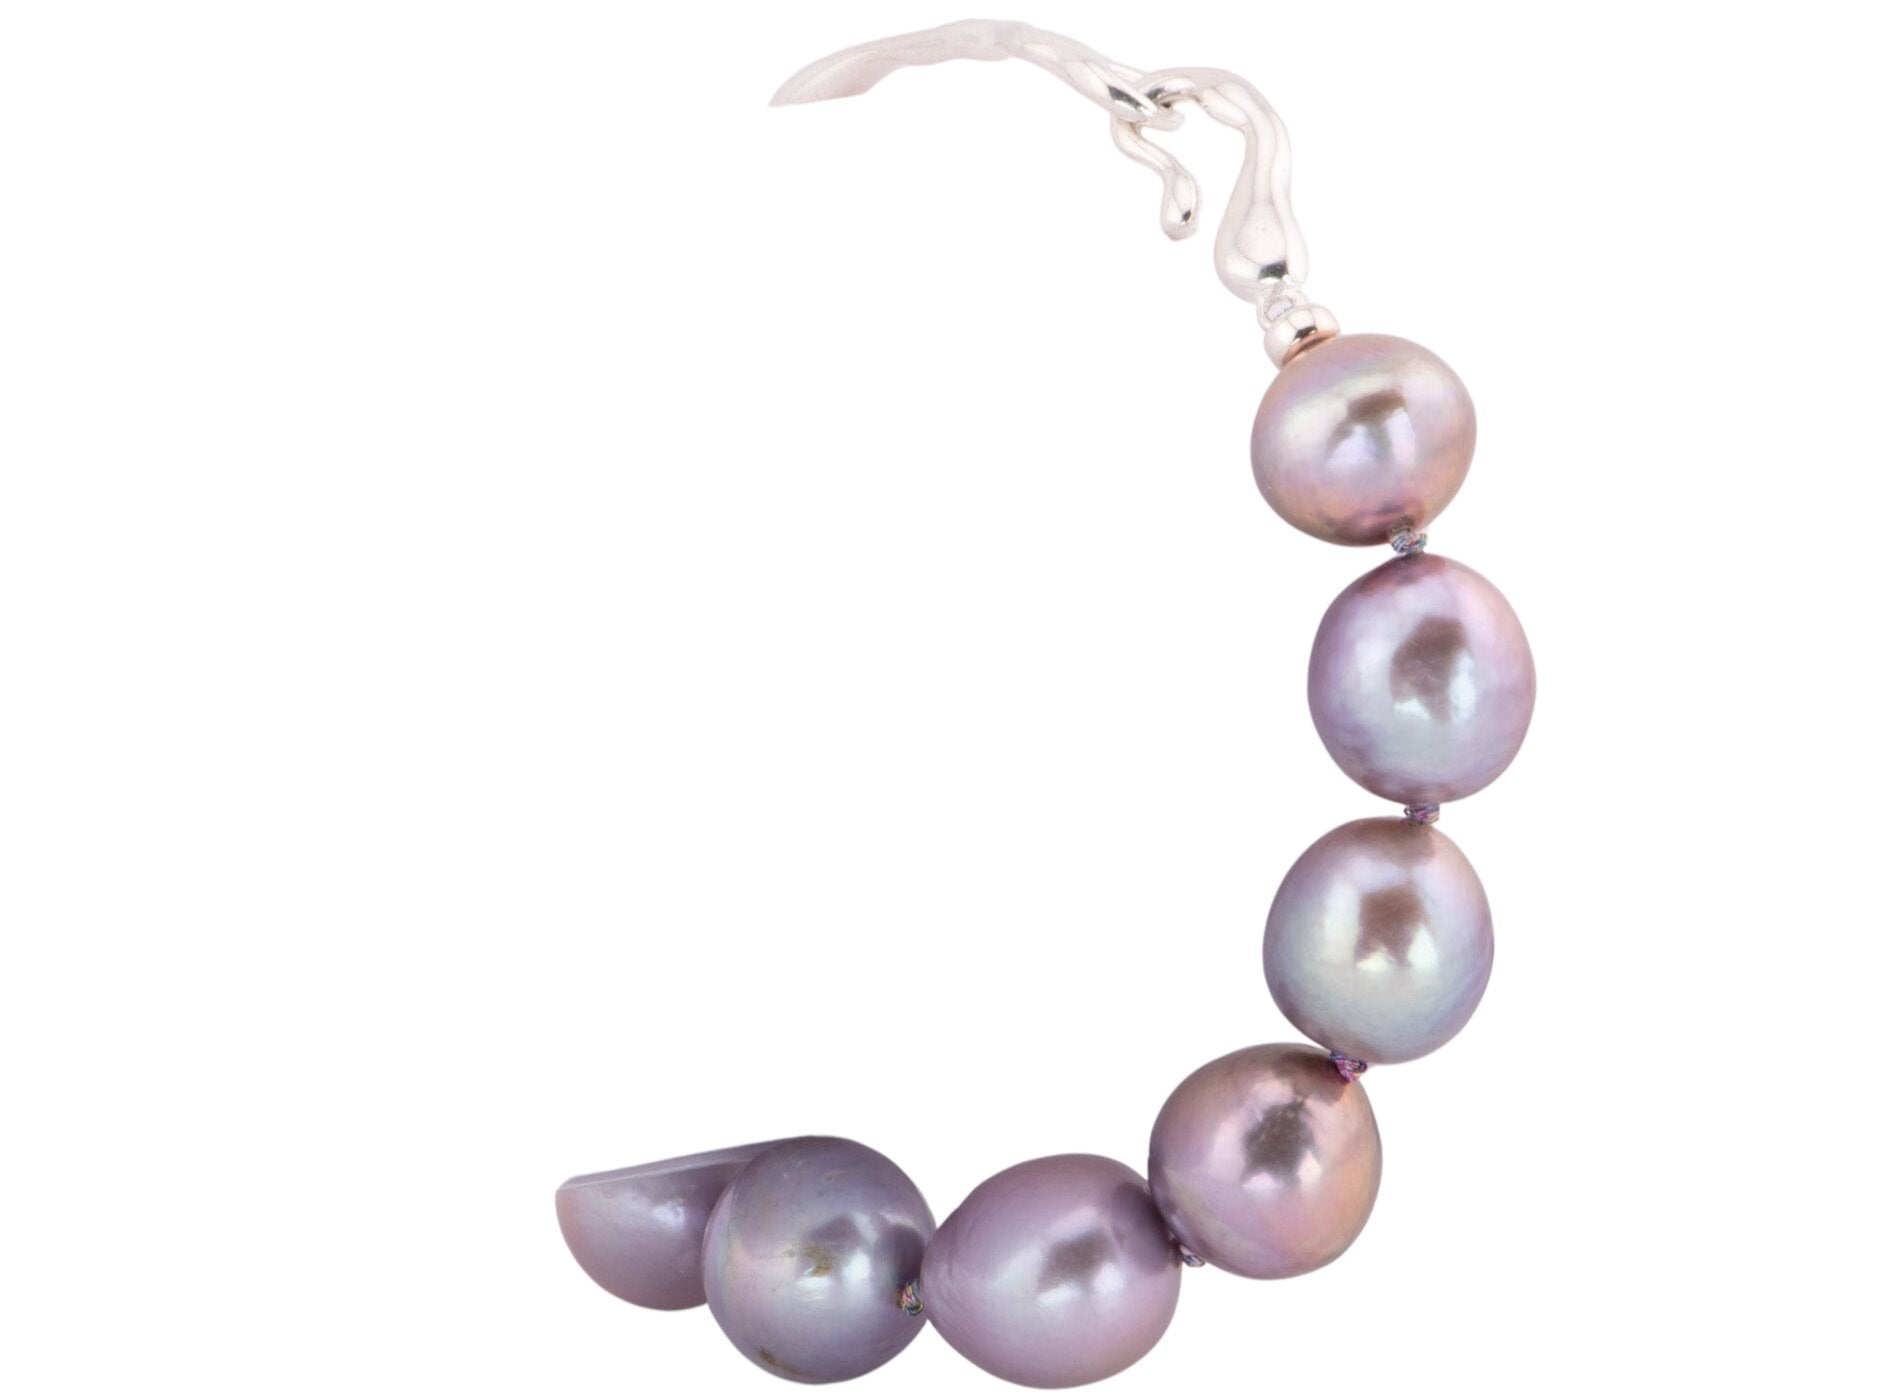 Purple Zircon Flower Pendant Natural Freshwater Pearl Bracelet for Women  Transparent Crystal Beads Adjustable Size Bracelet - AliExpress